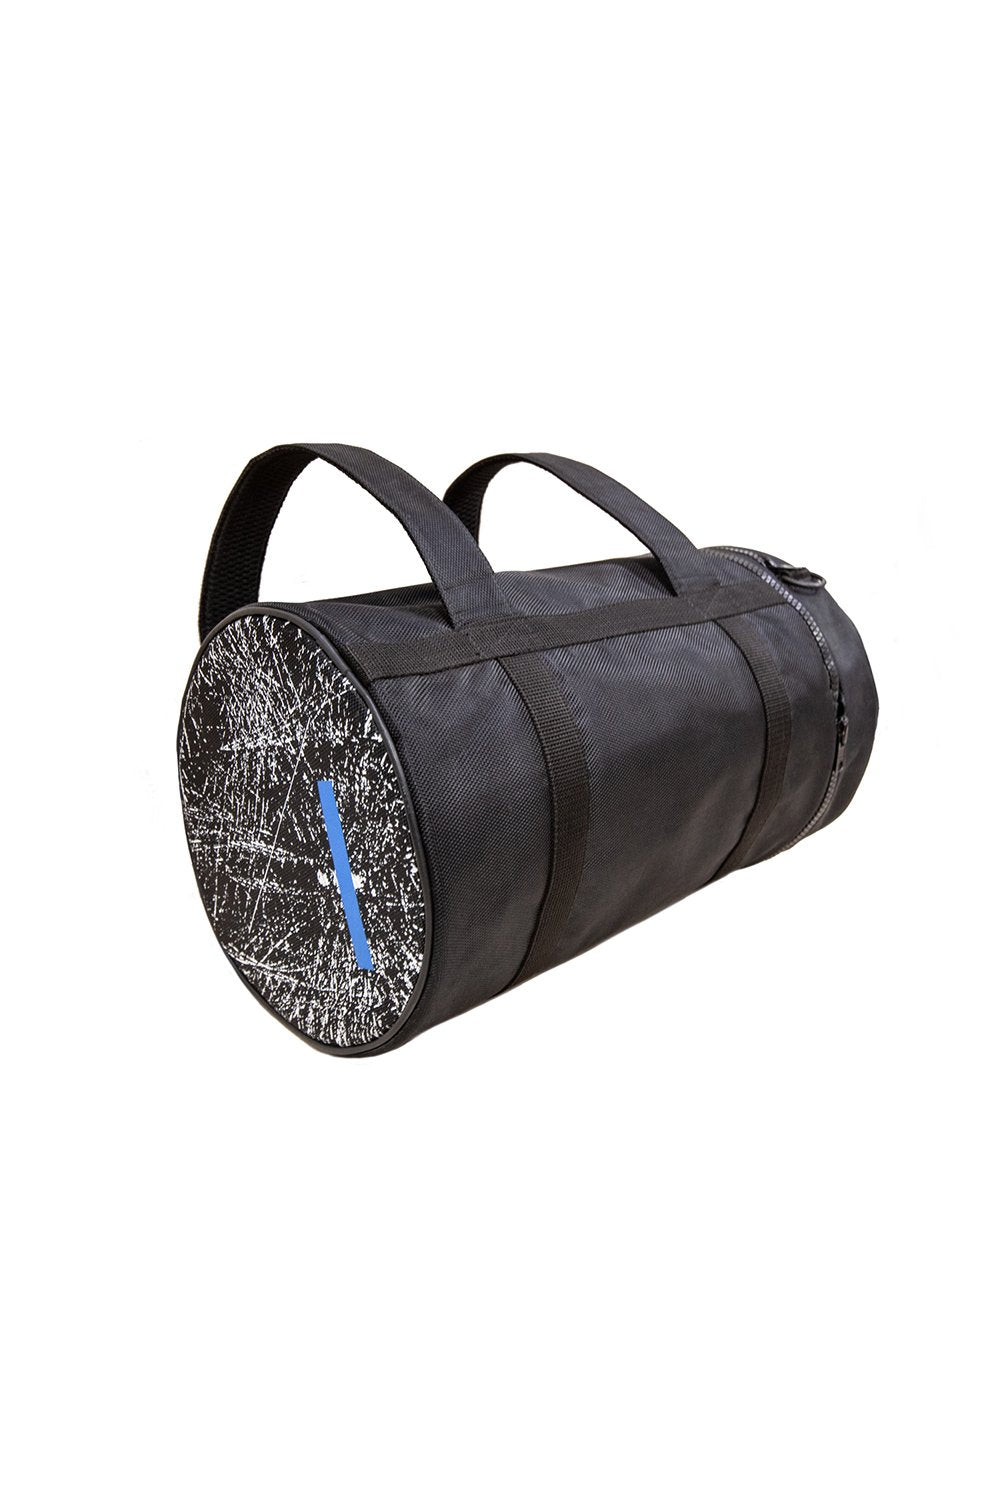 Multipurpose 'Explorer' Backpack with Detachable Tote Bag - BISKIT 